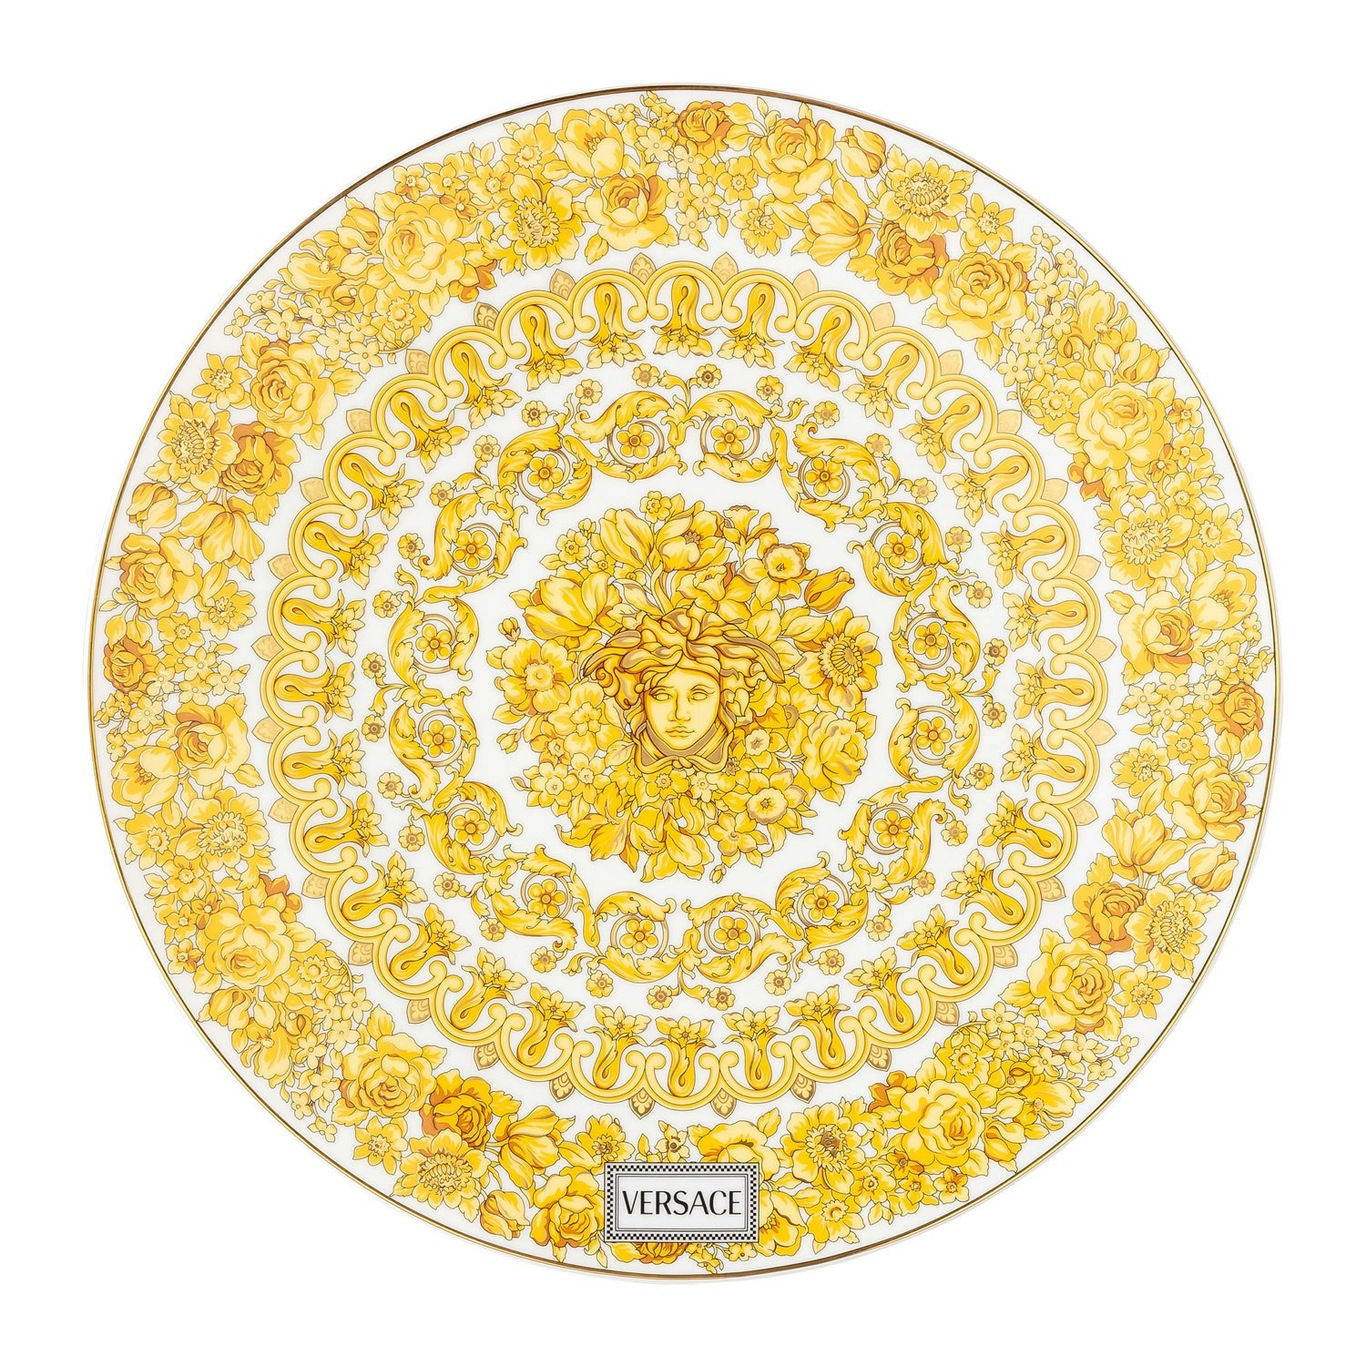 https://royaldesign.com/image/2/versace-medusa-rhapsody-service-plate-33-cm-0?w=800&quality=80